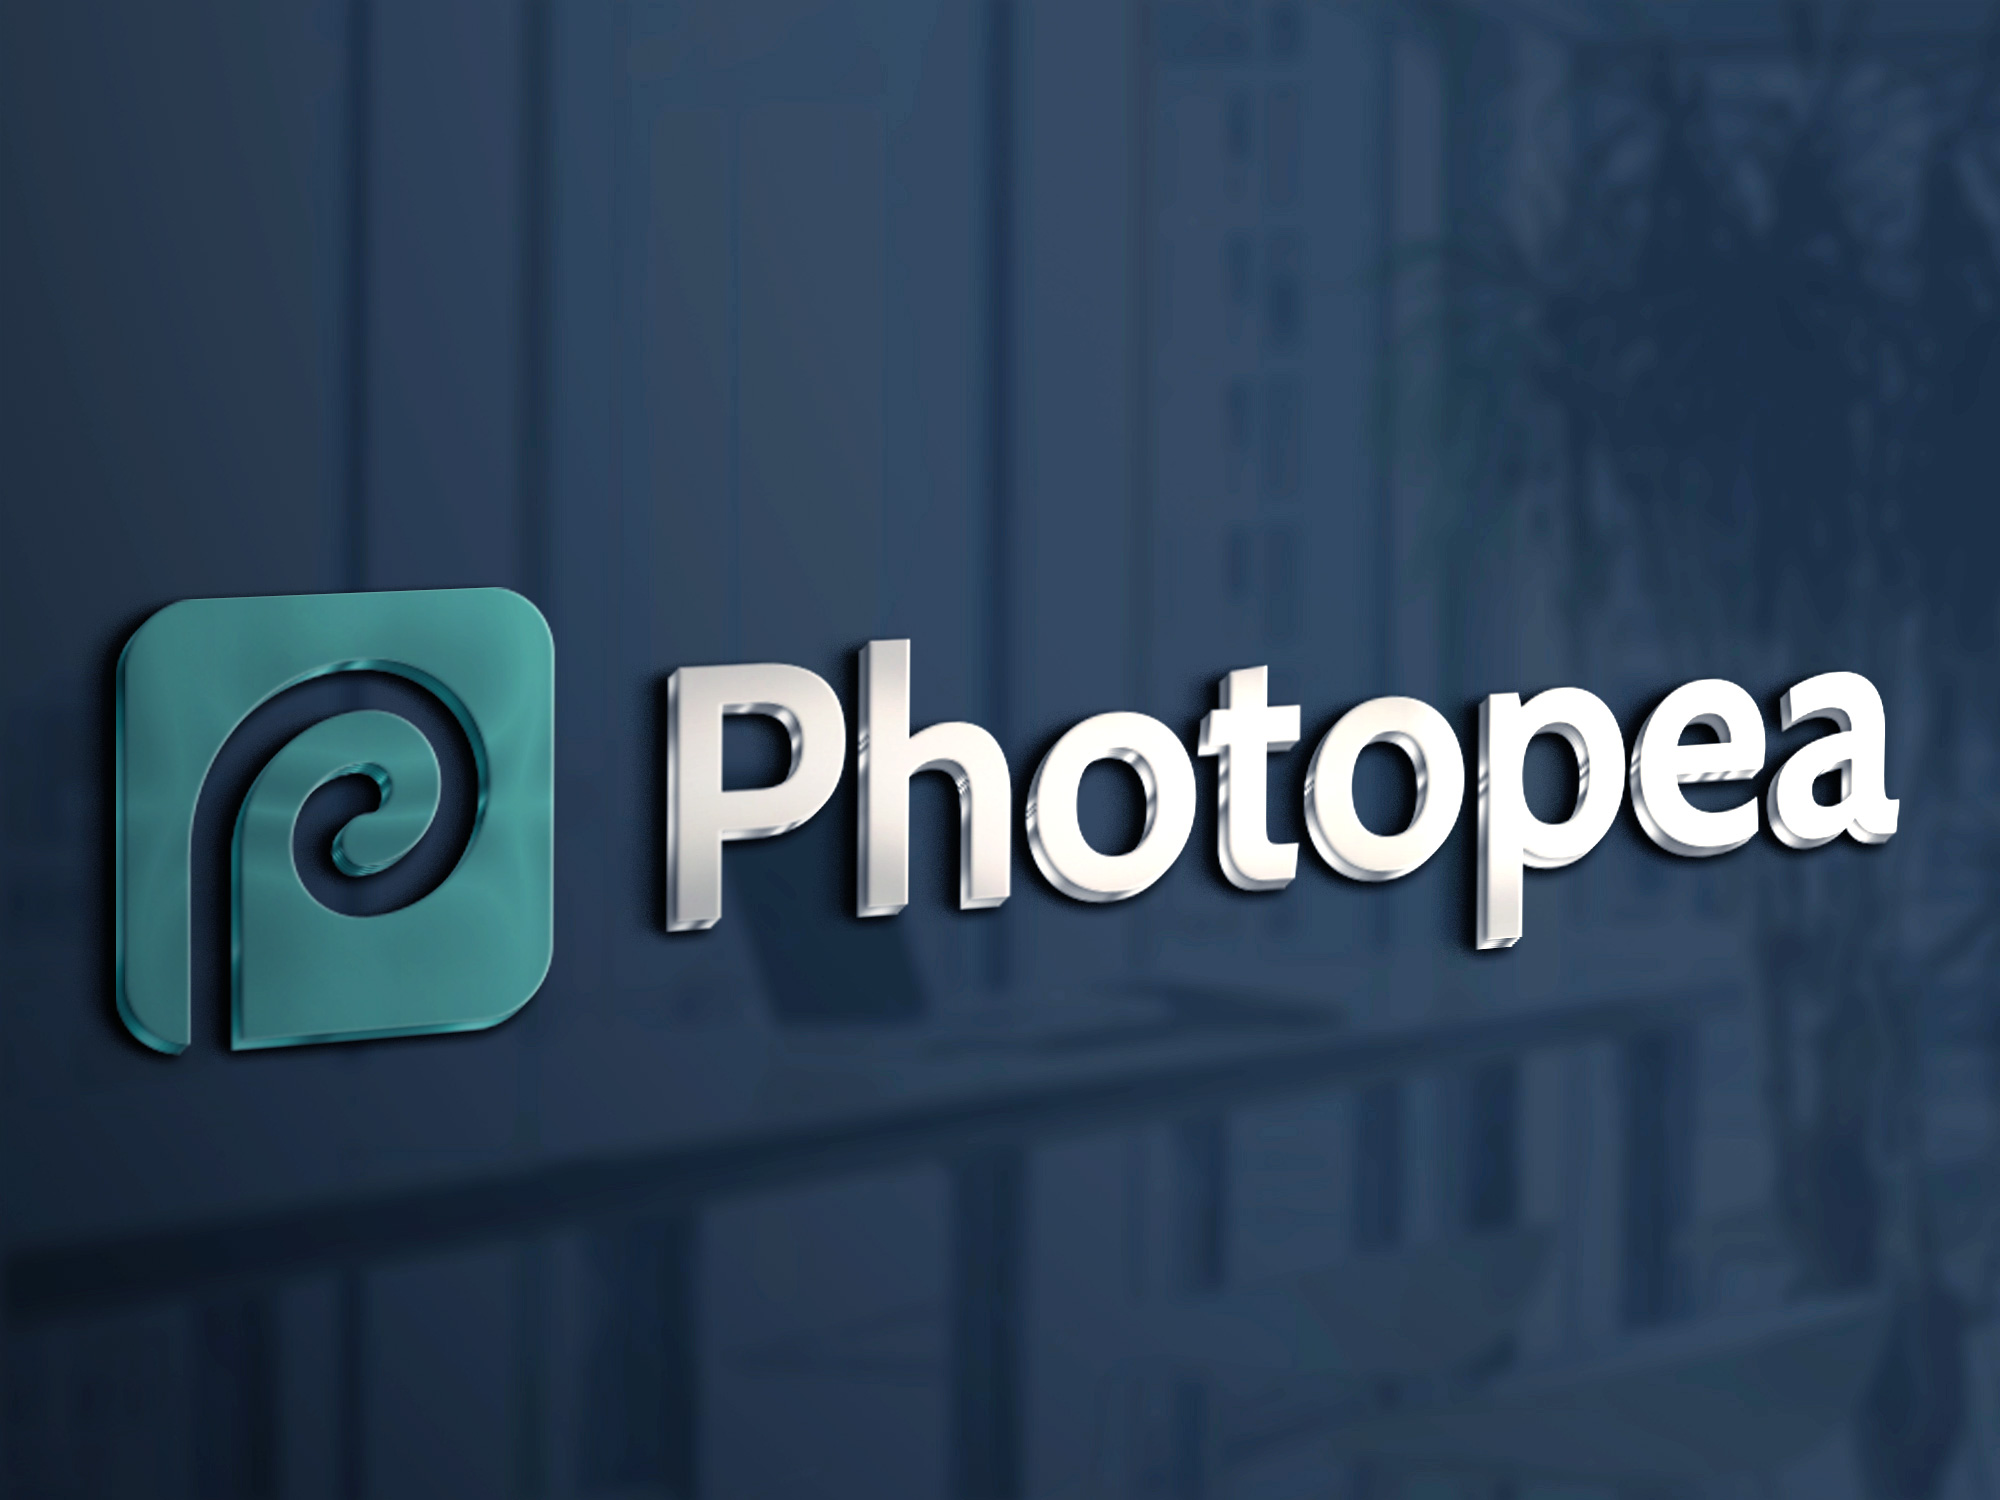 Photopea-3D-Logo-Mockup-on-Glass-Wall